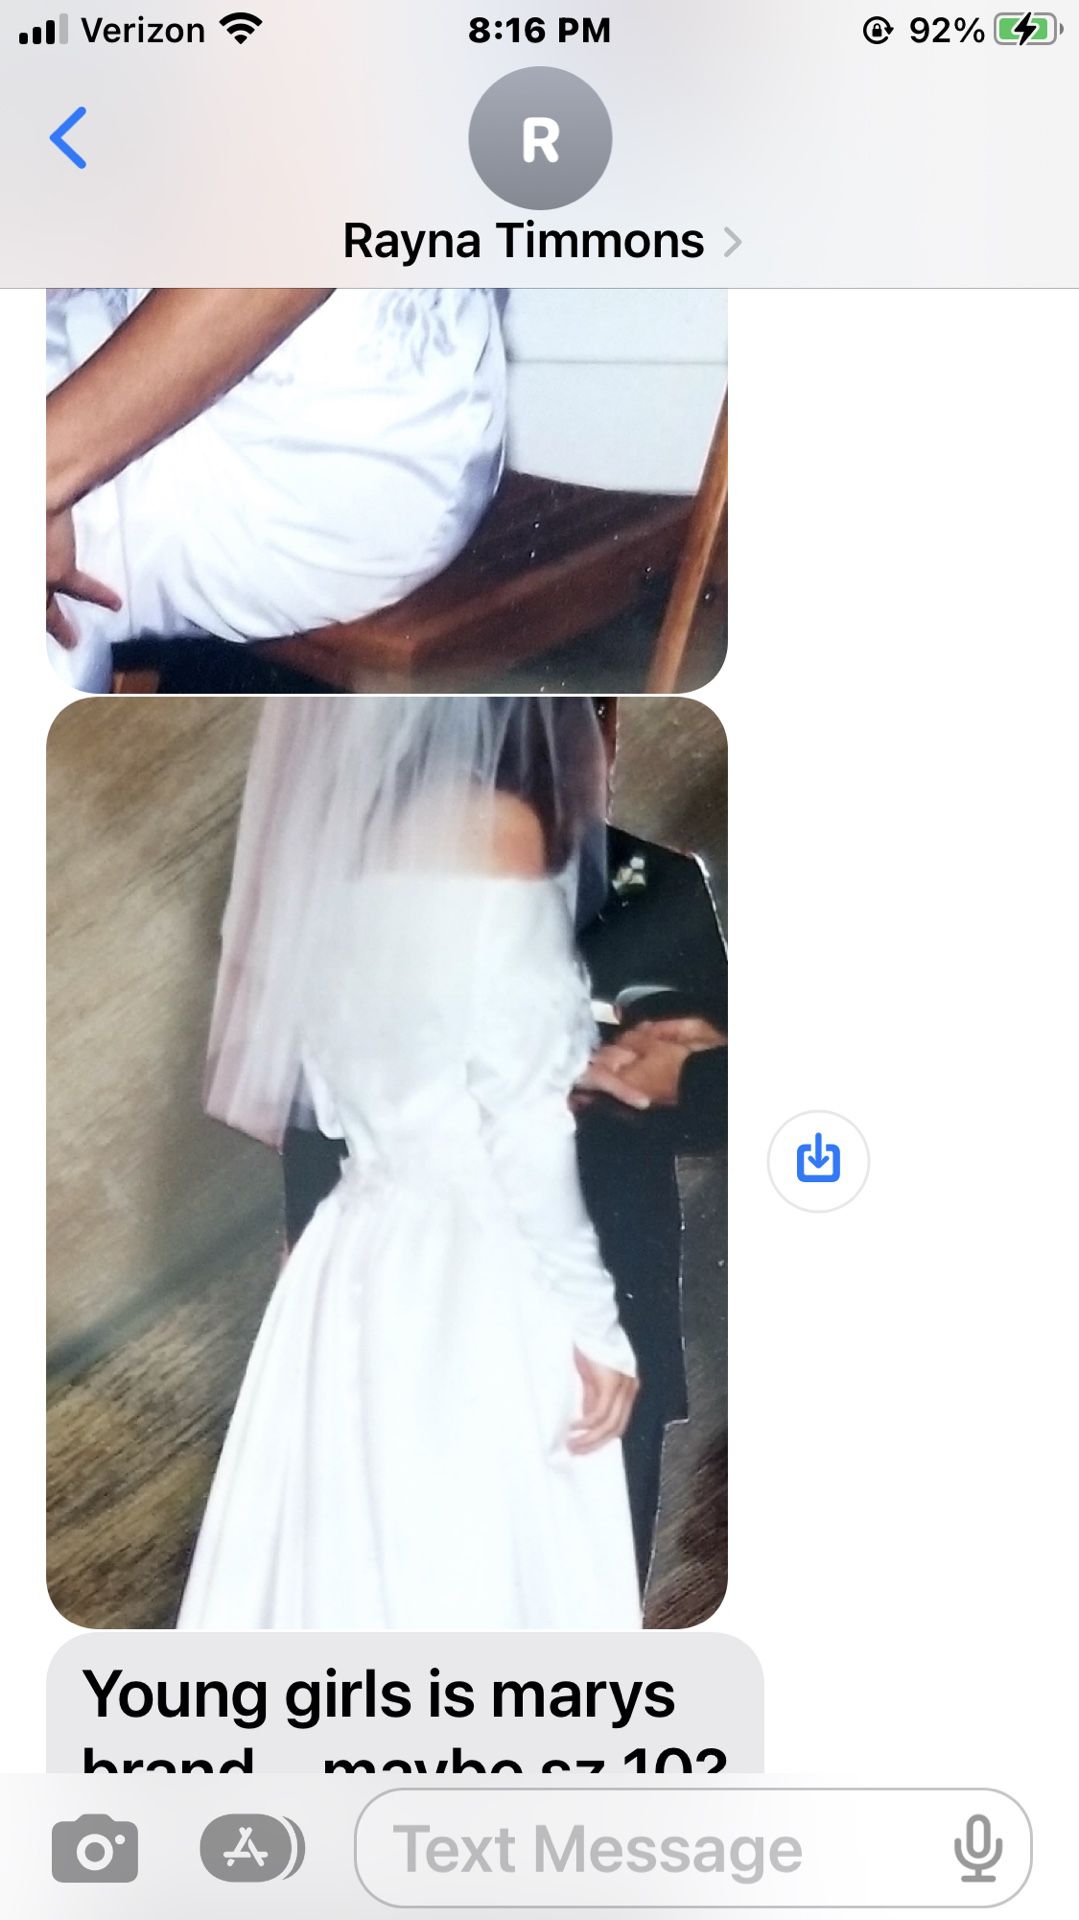 Custom Bridal Dress , Size 7 Really Not Sure 